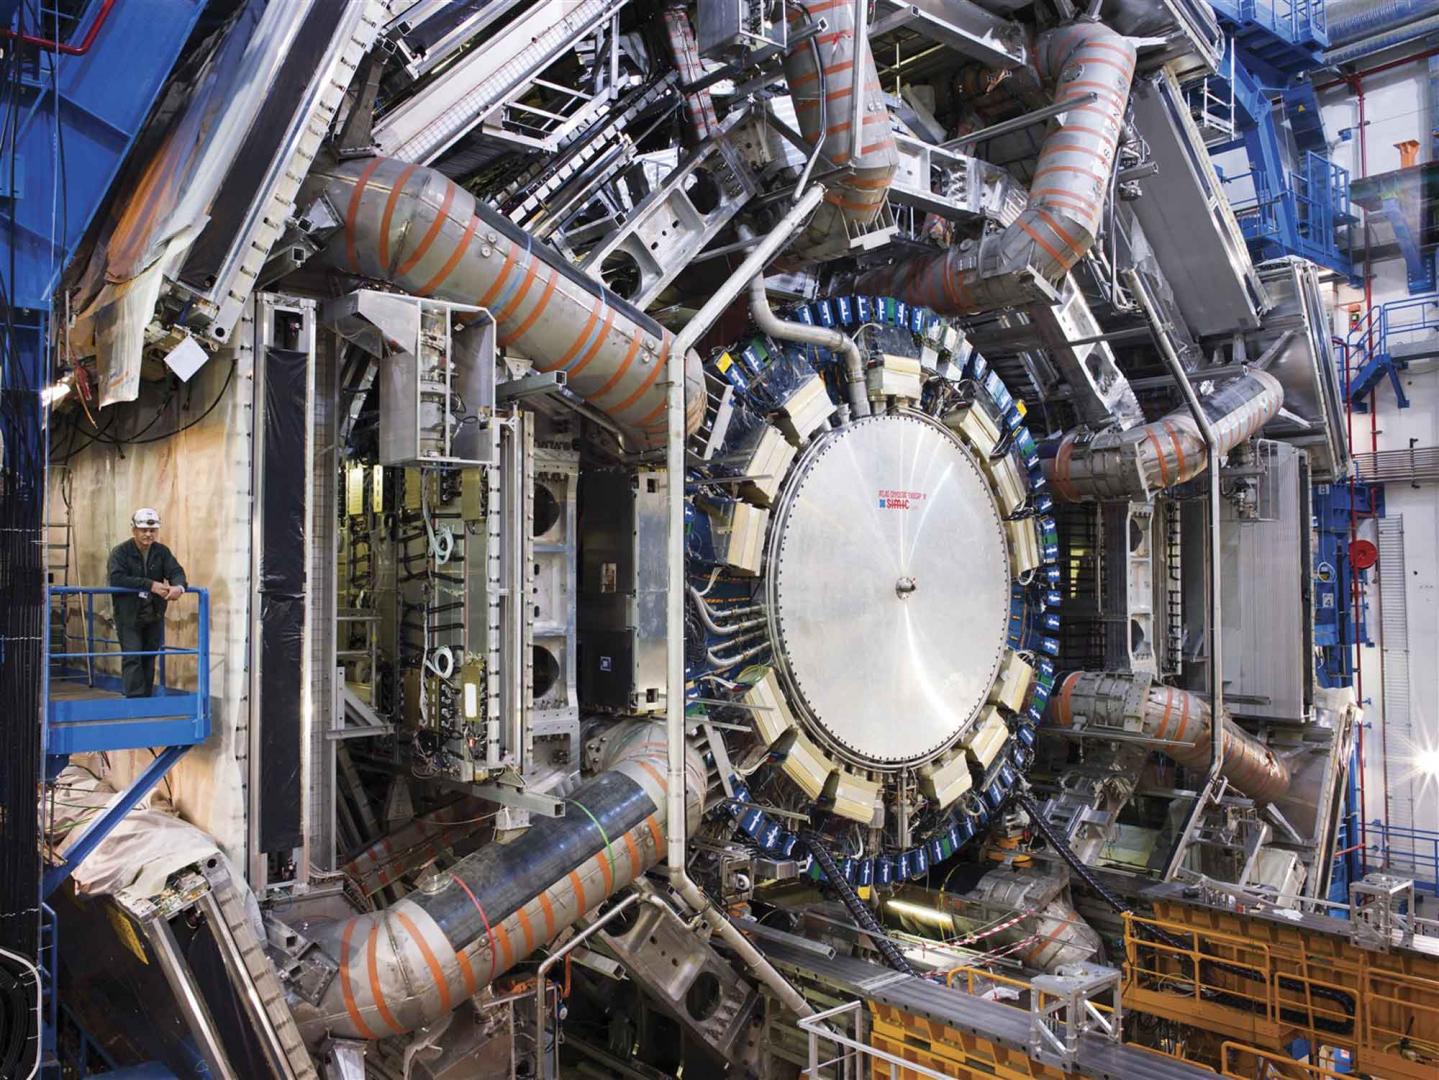 ATLAS sees Higgs boson decay to fermions